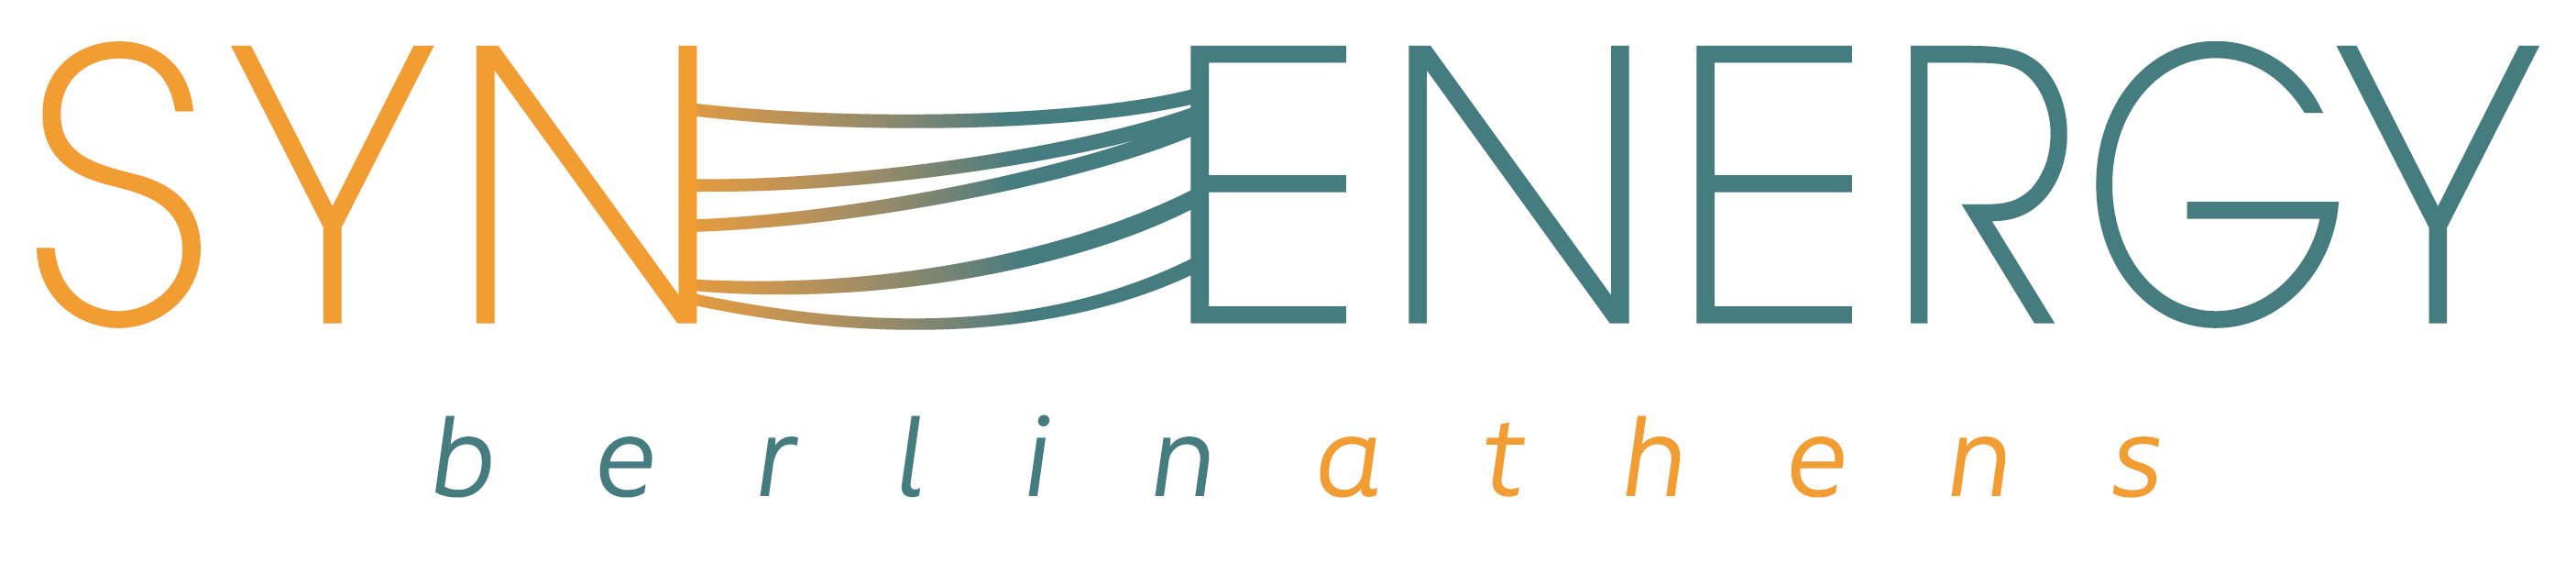 SYN_ENERGY BERLIN_ATHENS Logo